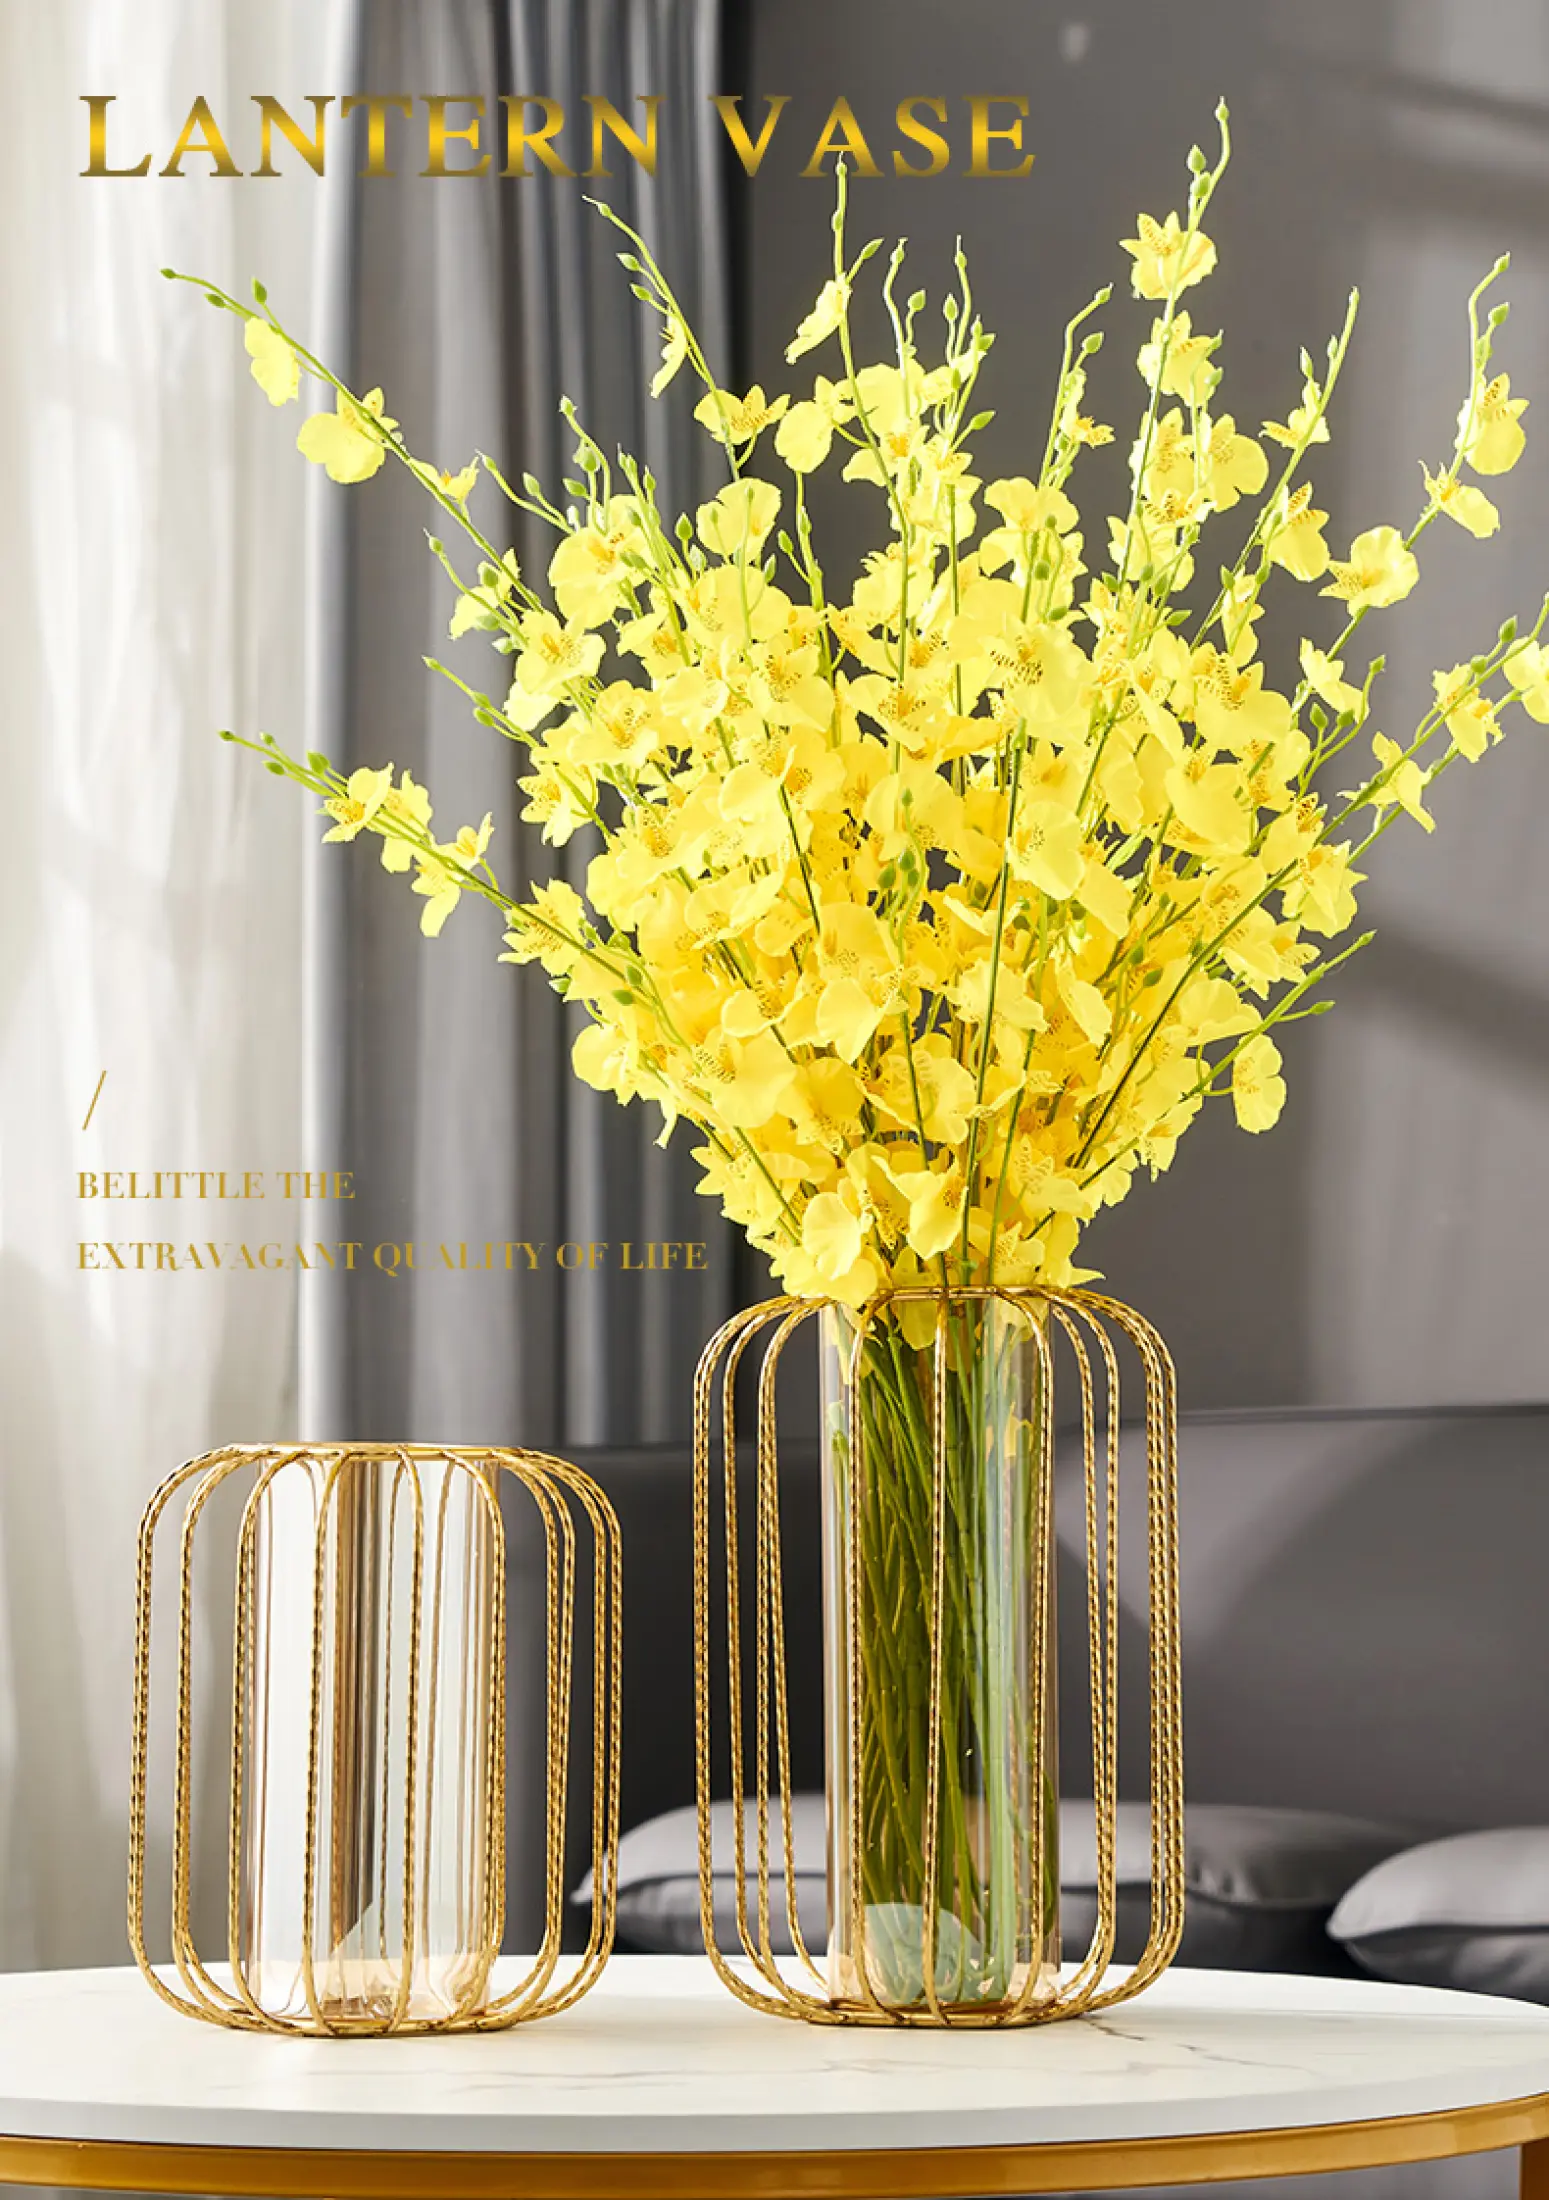 Lantern-shaped Iron Vase Gold Plated Flower Vase Flower Pot Home Wedding Decoration